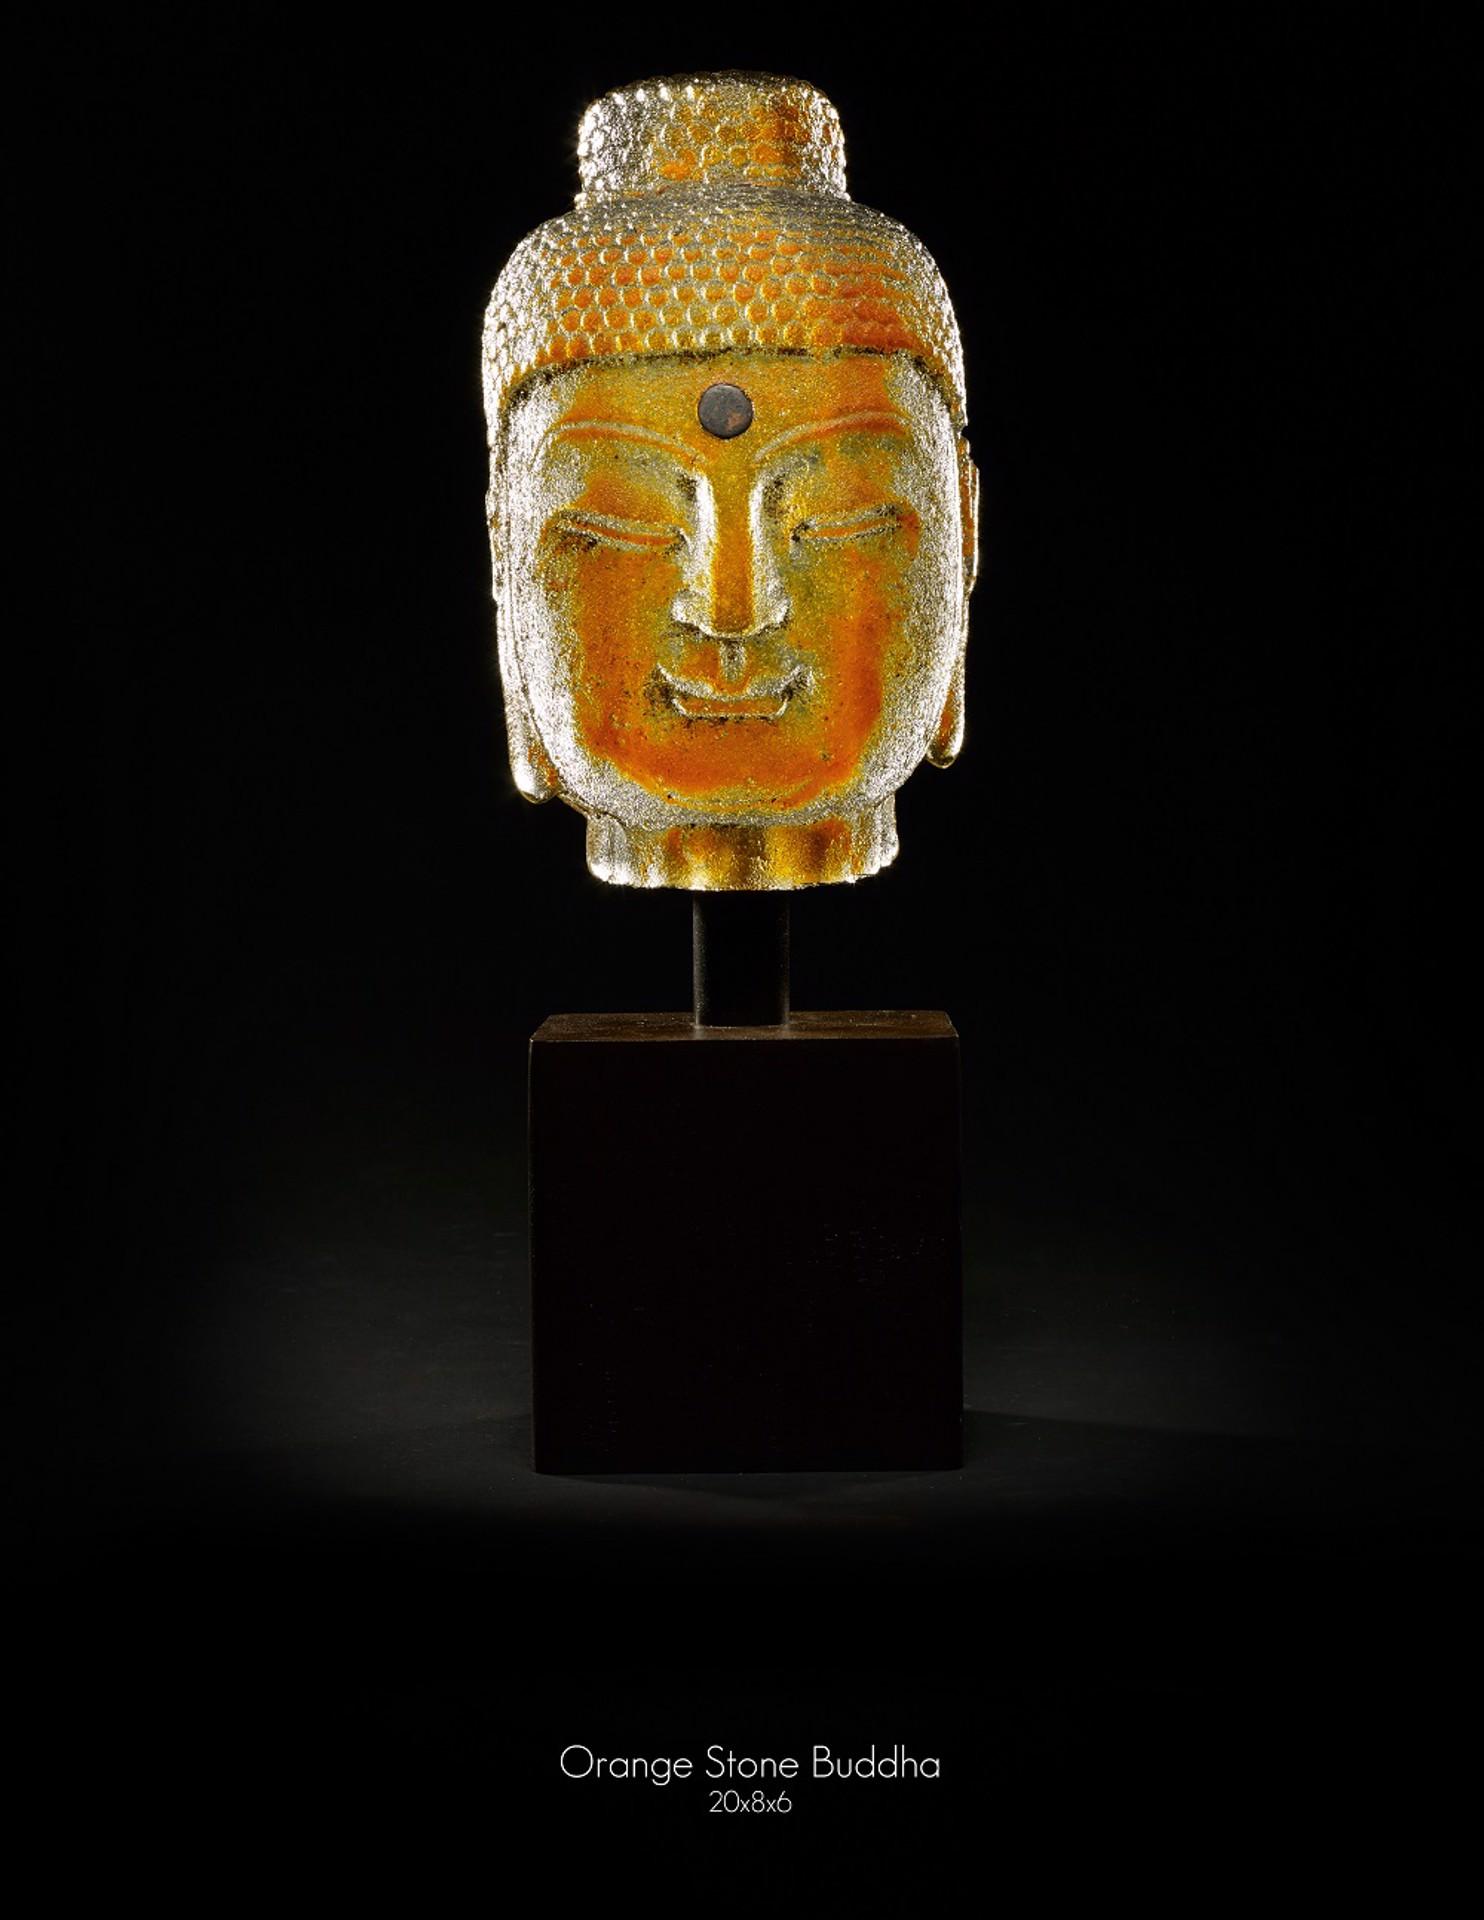 Orange Stone Buddha - Art by Marlene Rose (b. 1967)